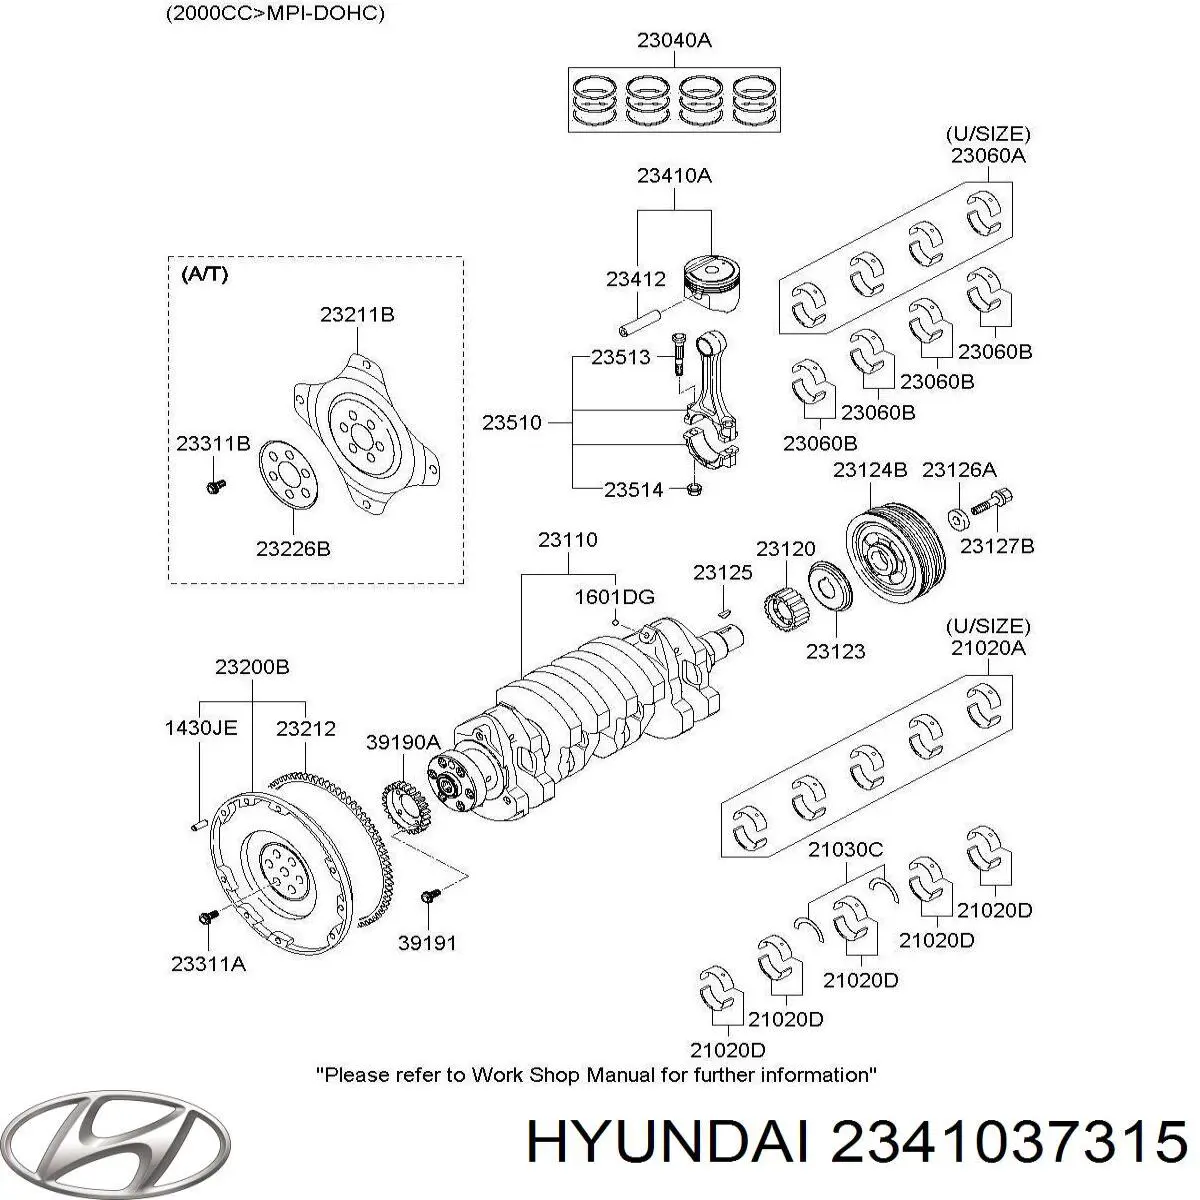 2341037310 Hyundai/Kia pistón con bulón sin anillos, std